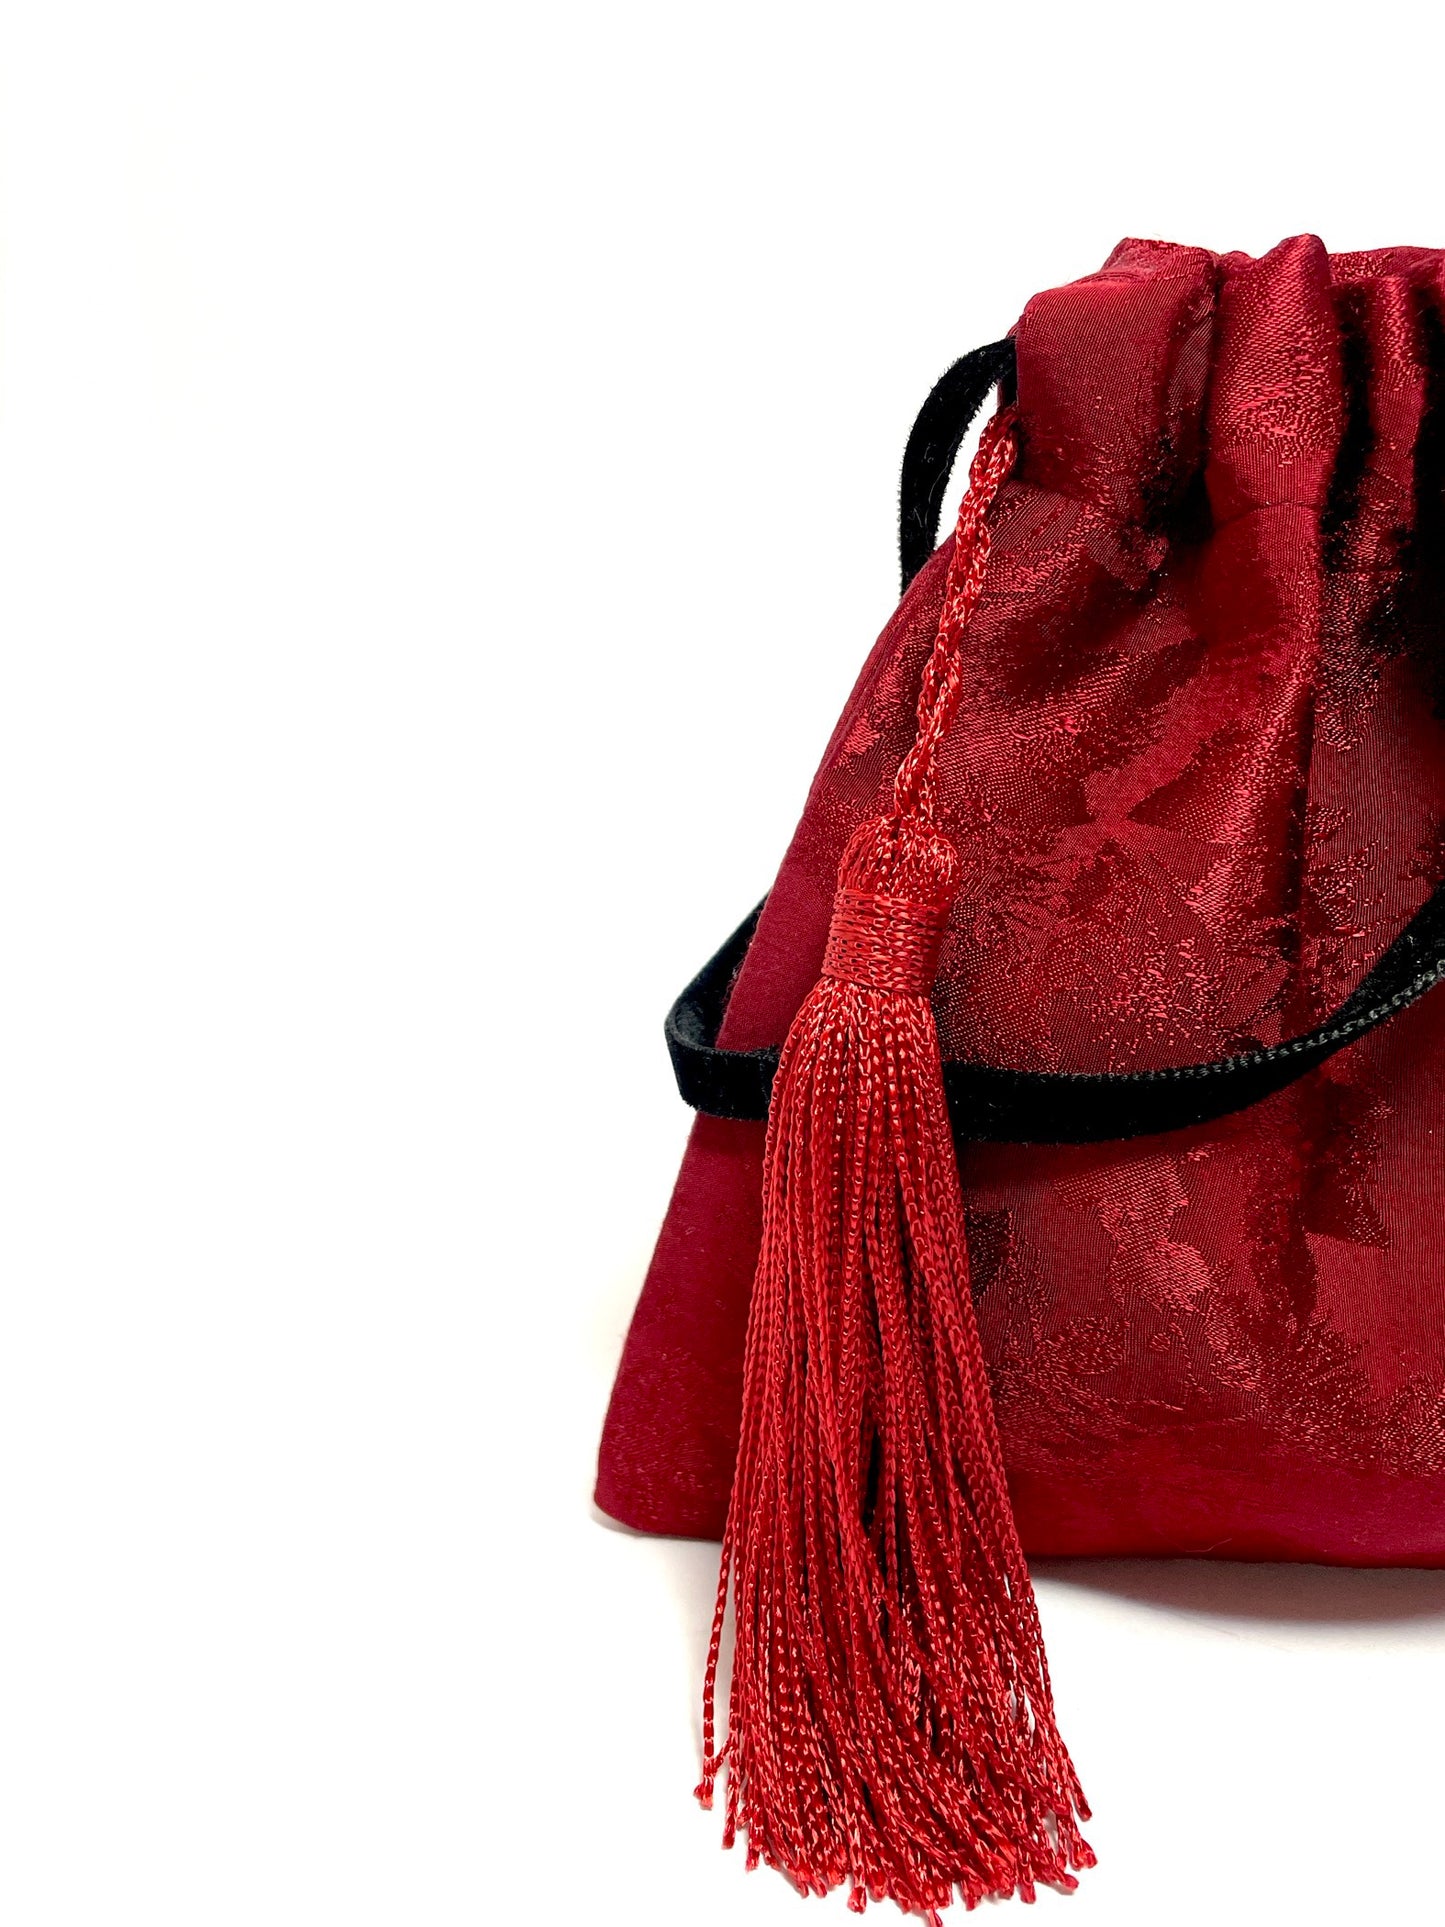 Little red evening handbag